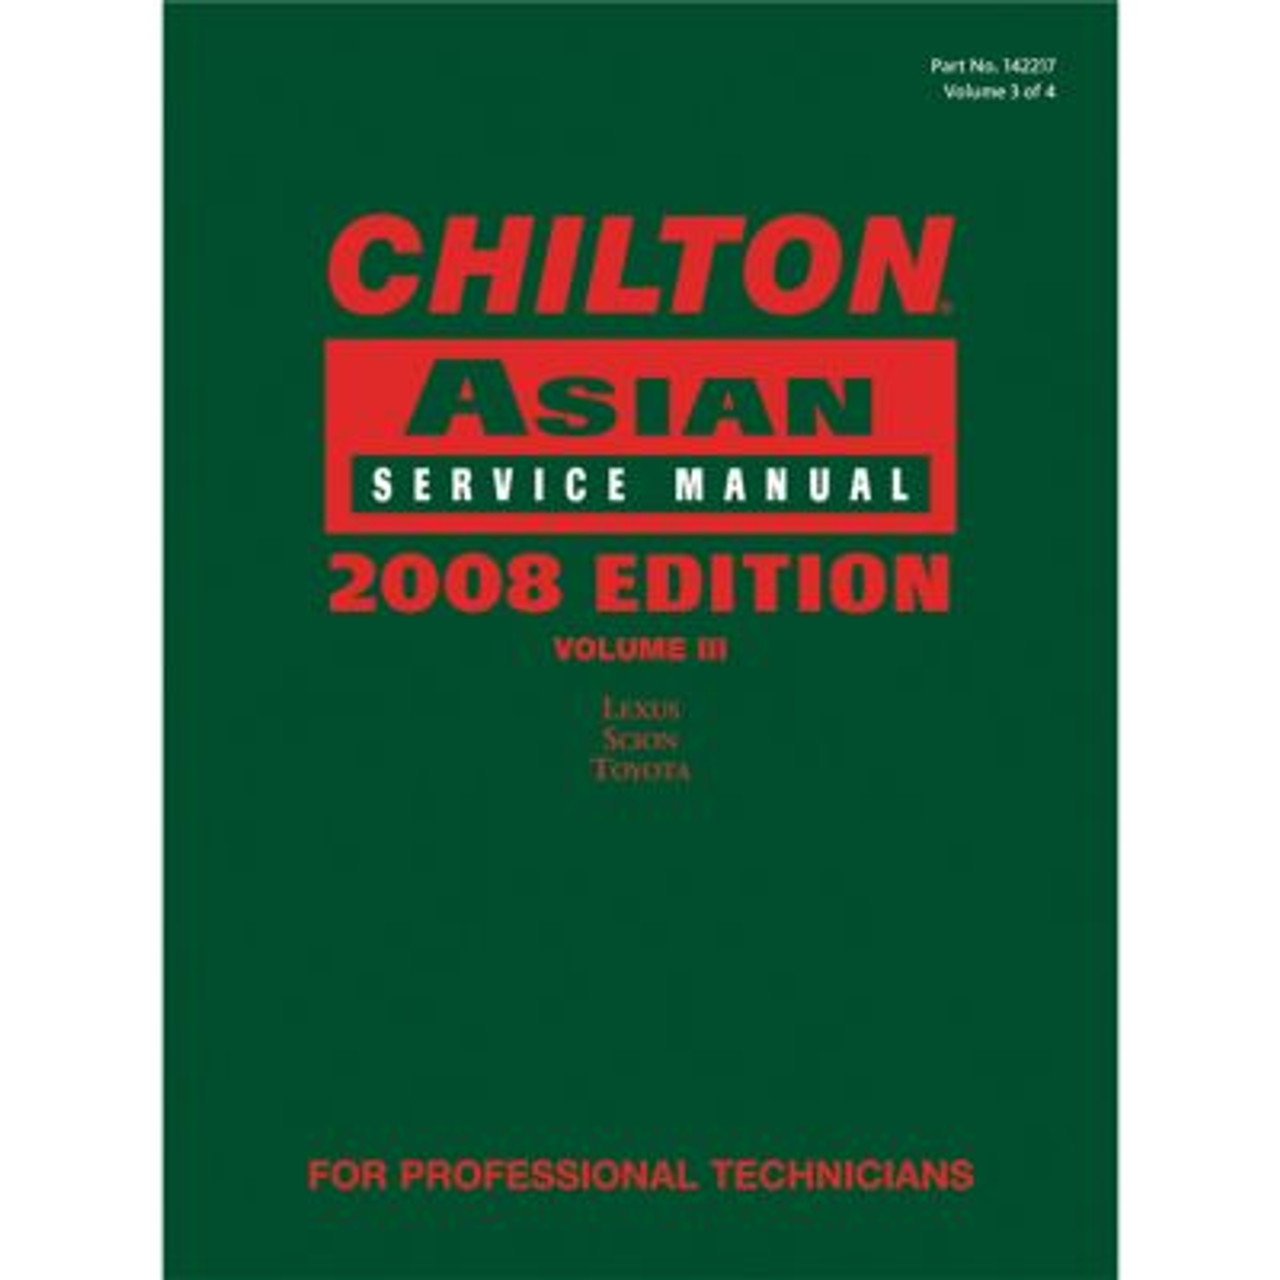 Chilton 2008 Asian Service Manual Volume 3